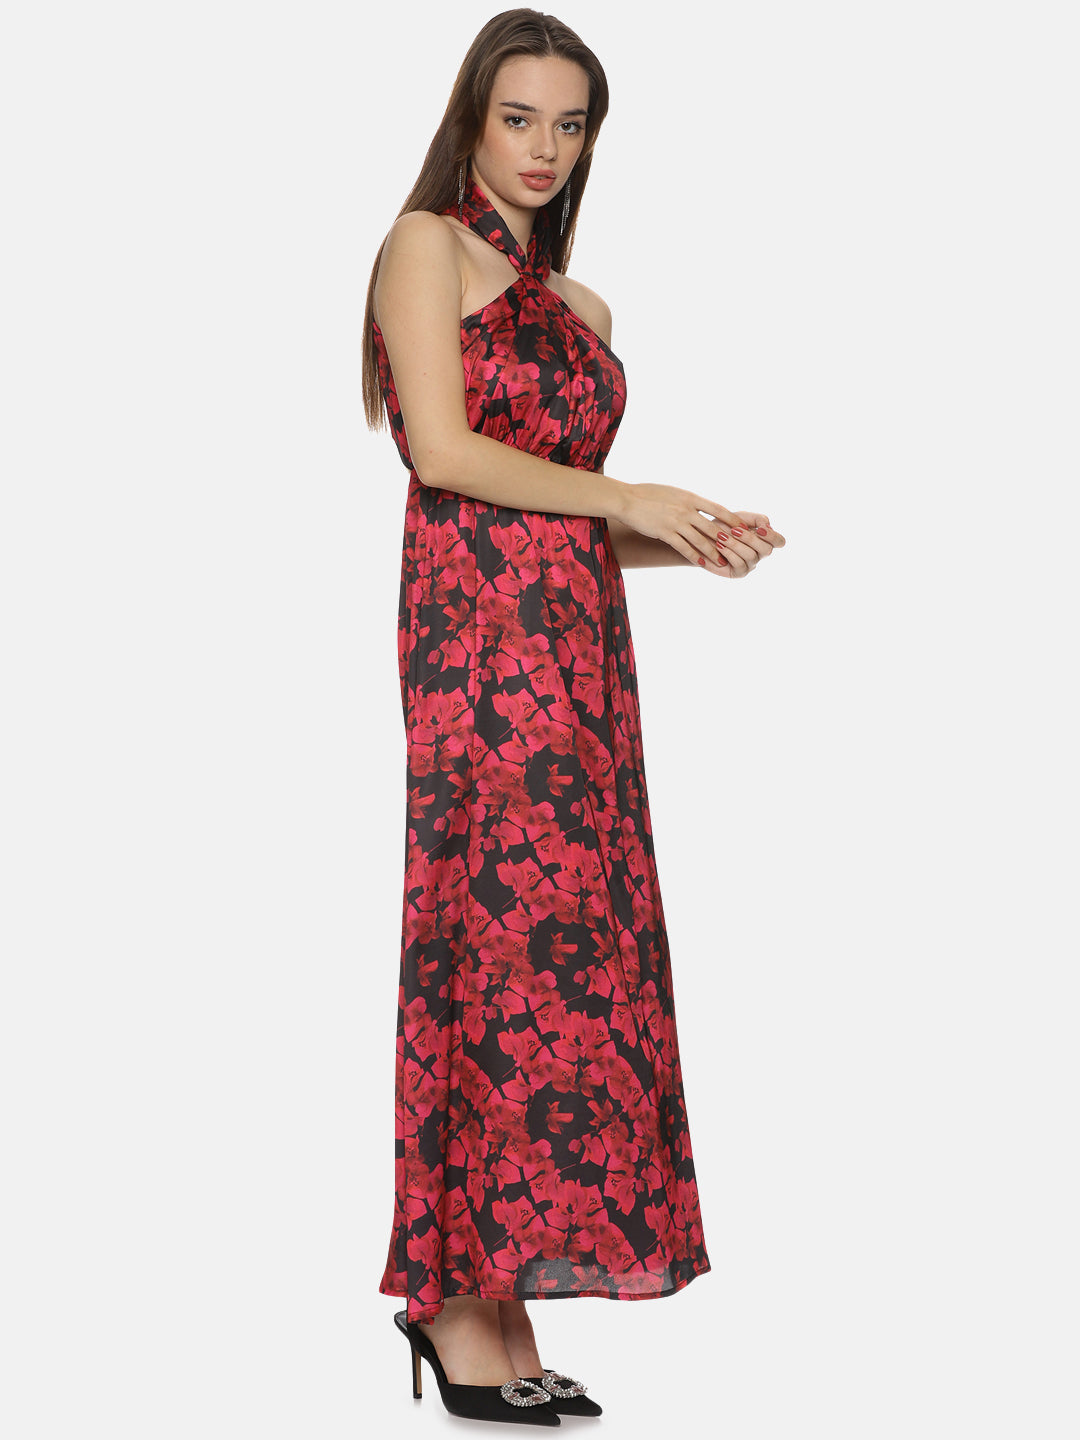 IS.U Floral Red Halter Maxi Dress